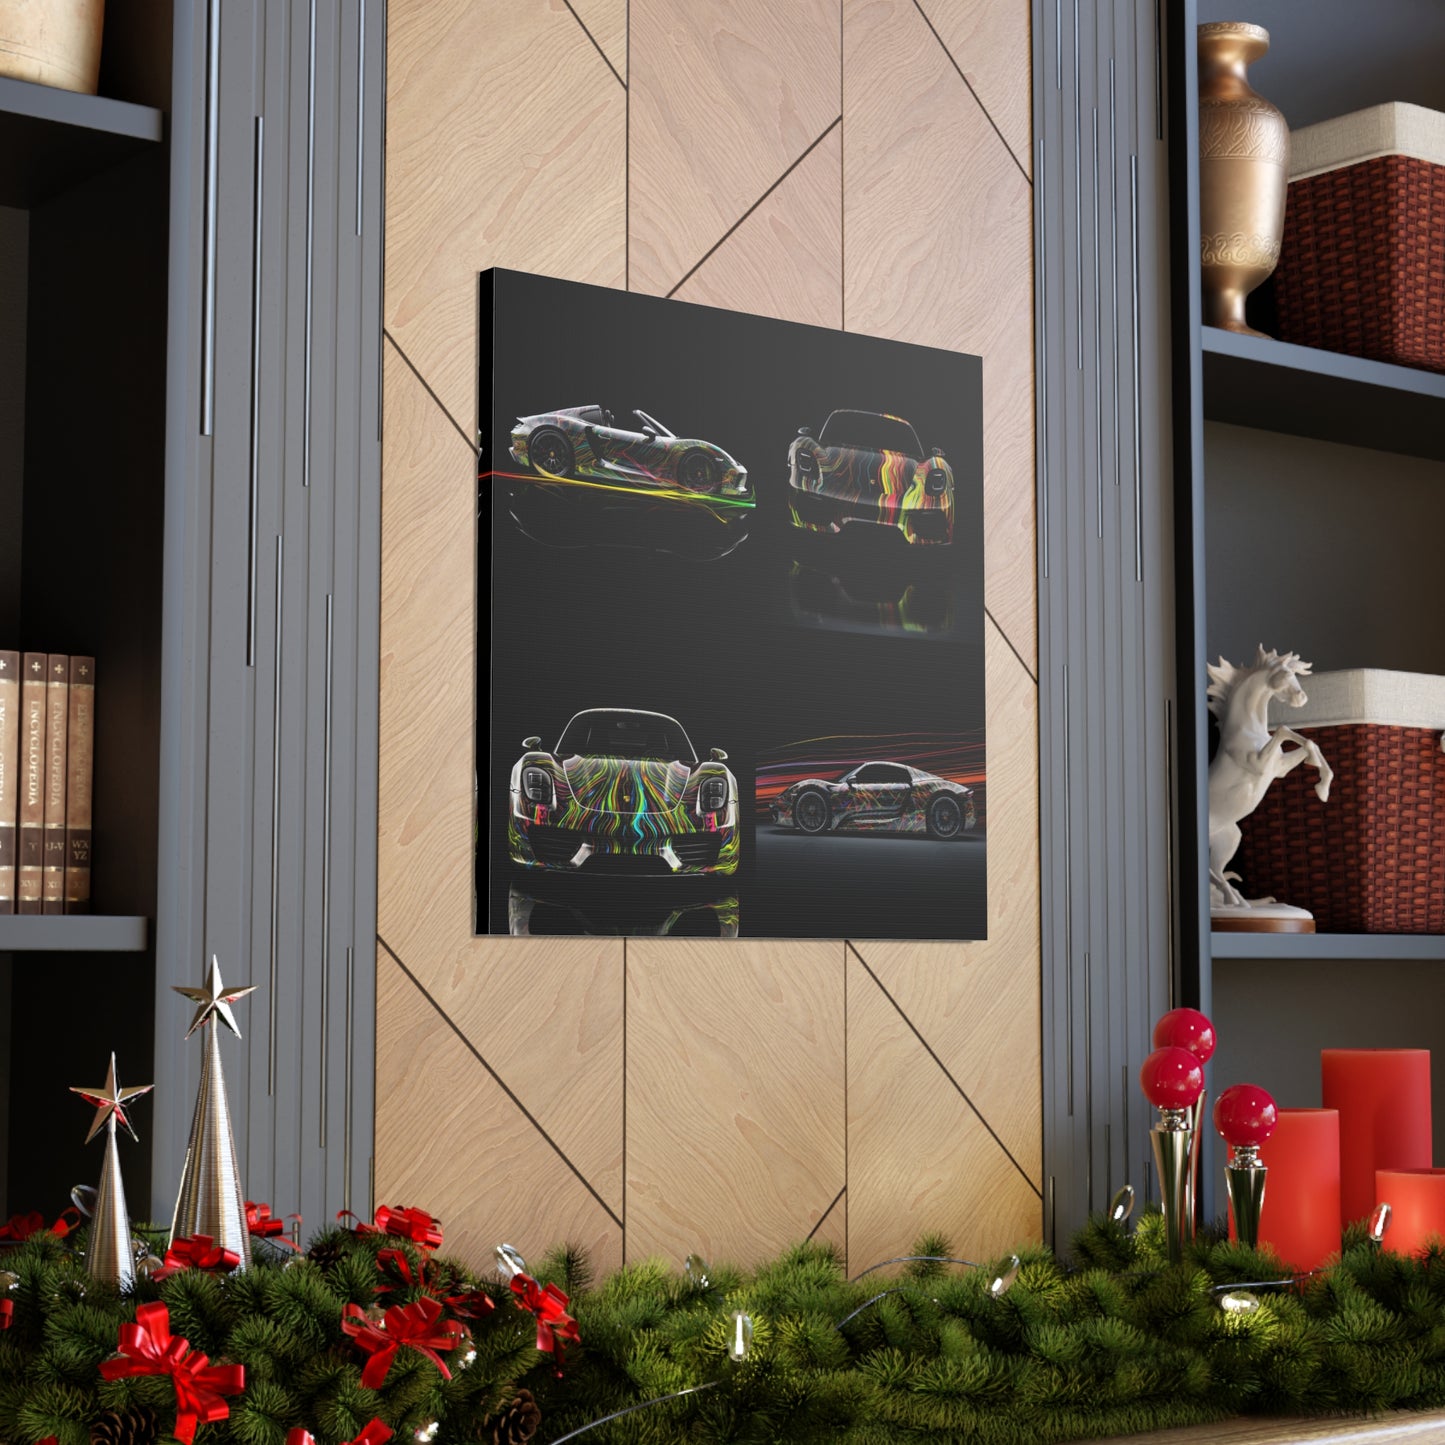 Canvas Gallery Wraps Porsche Line 4 pack